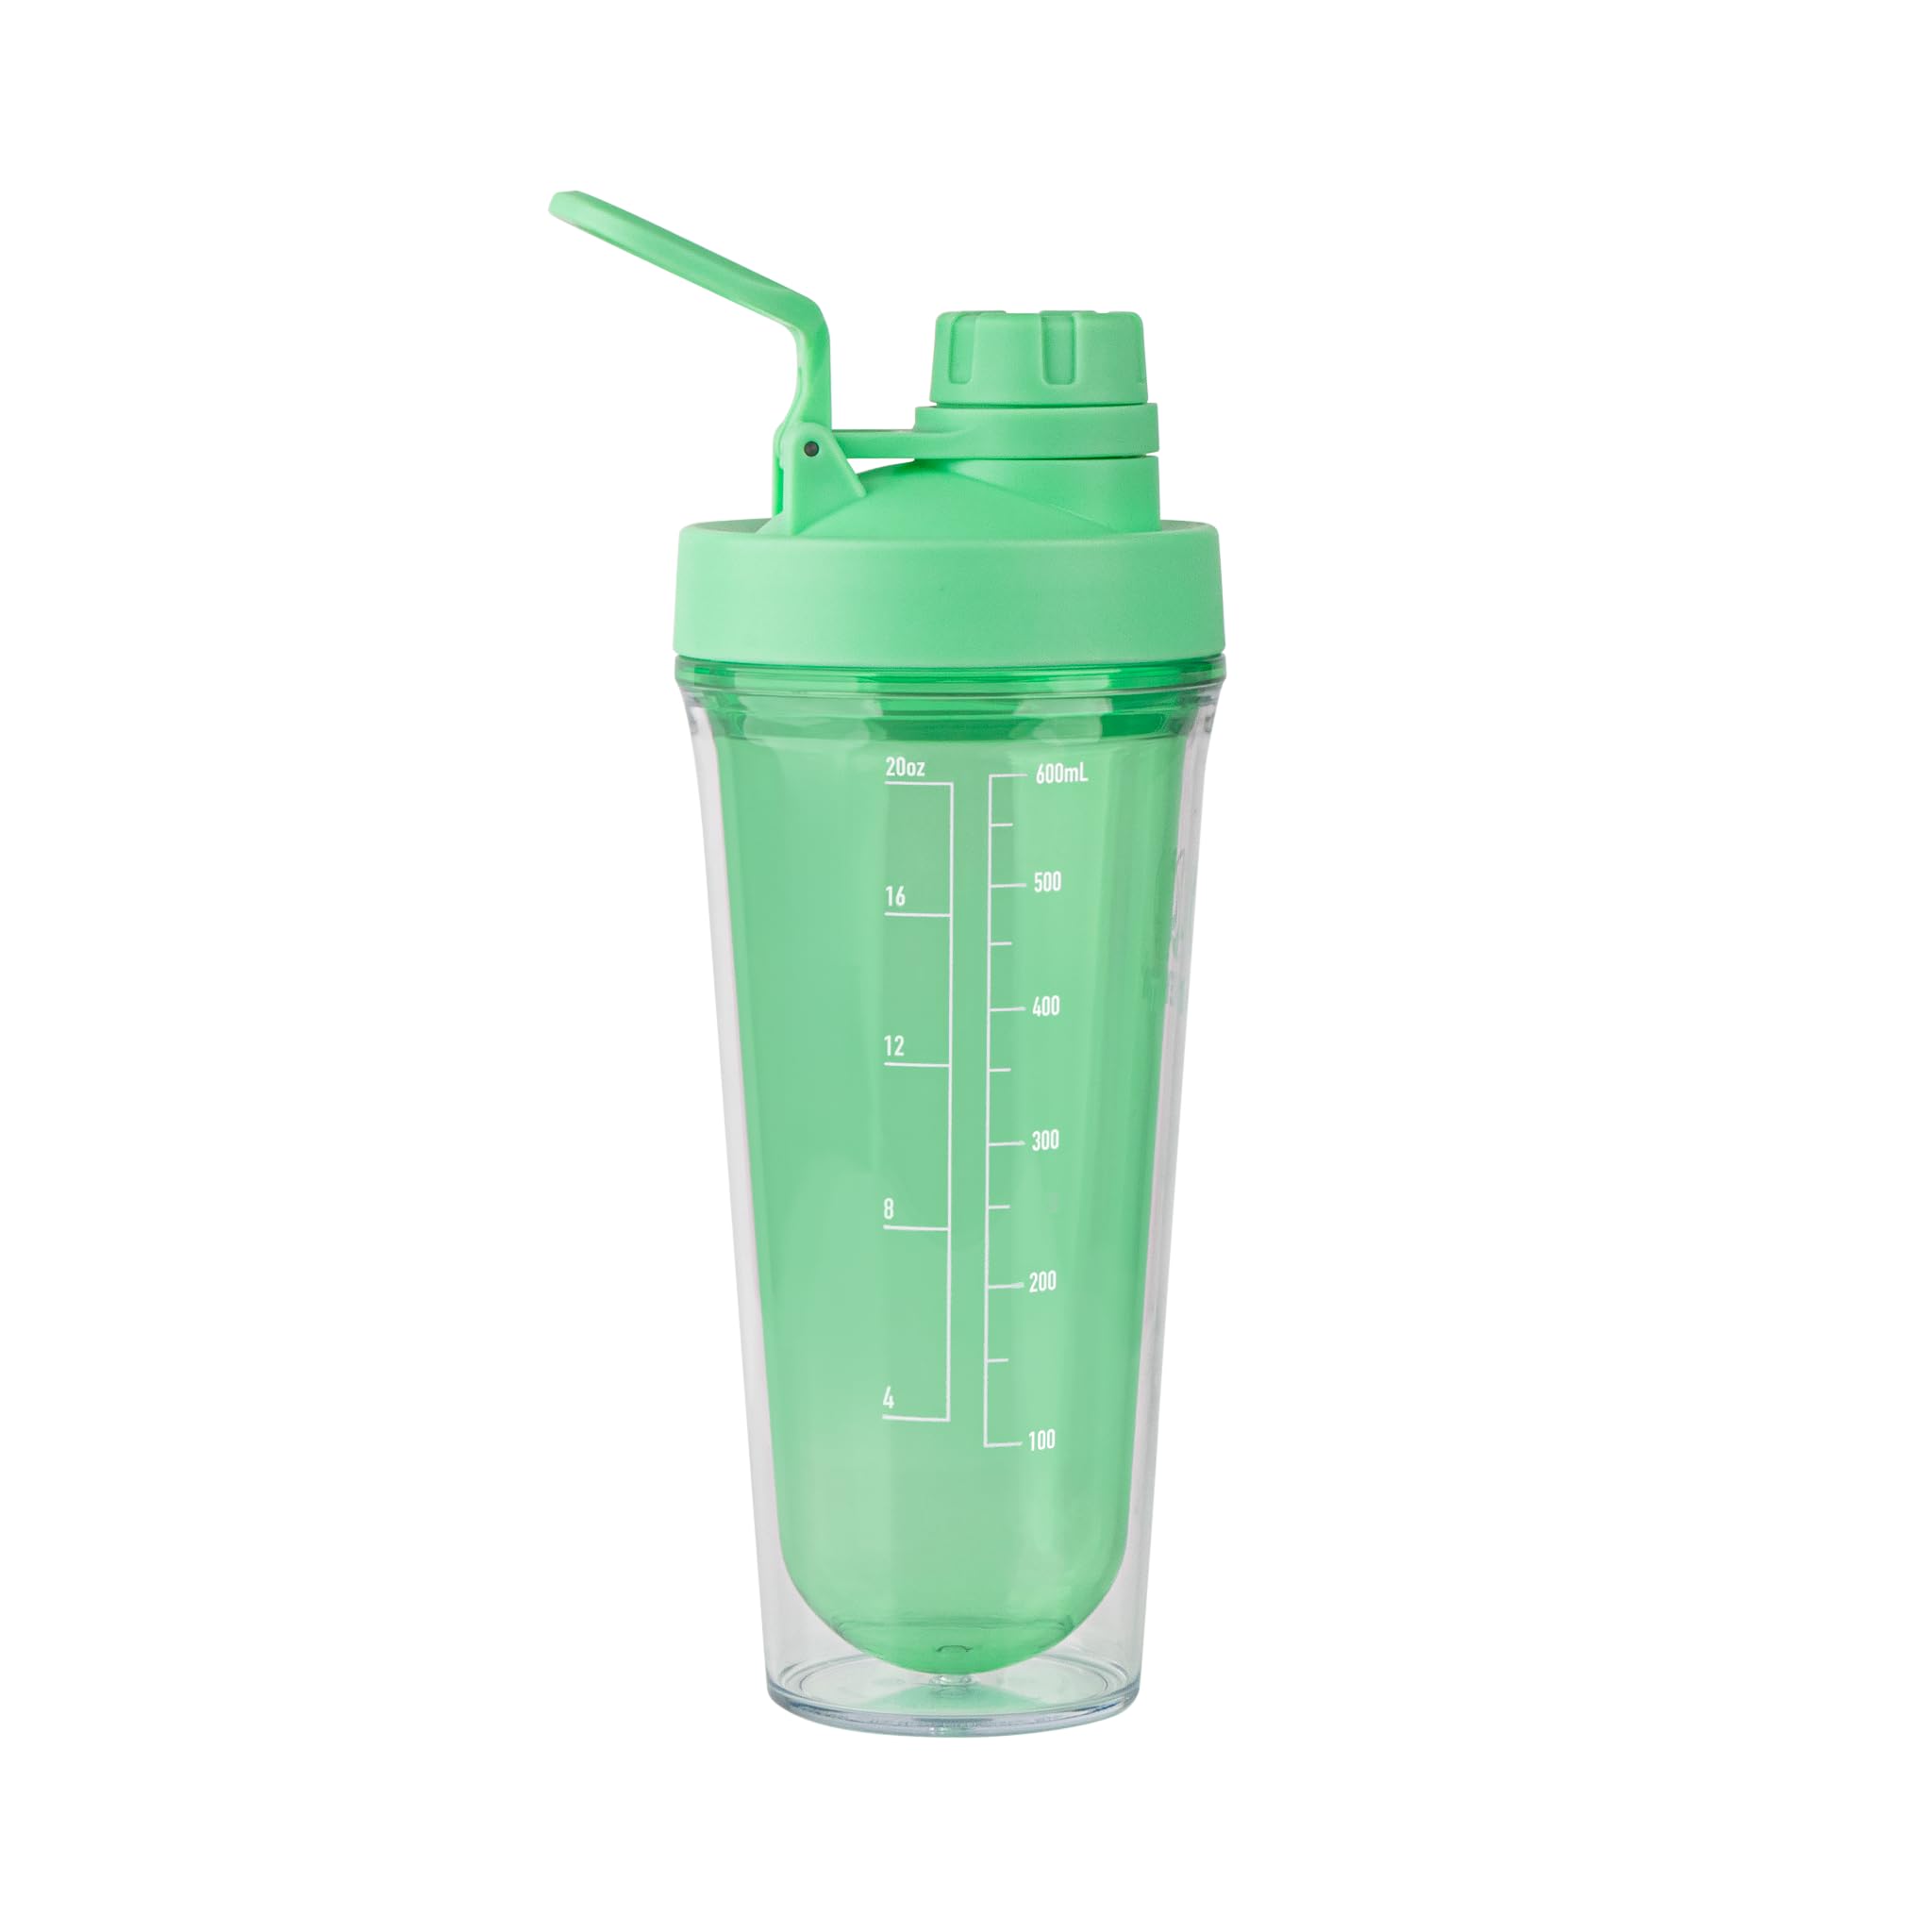 Takeya Premium Quality Tritan Plastic Protein Shaker, BPA Free, Leakproof Spout Lid, Shatterproof, 24 oz, Pistachio Green